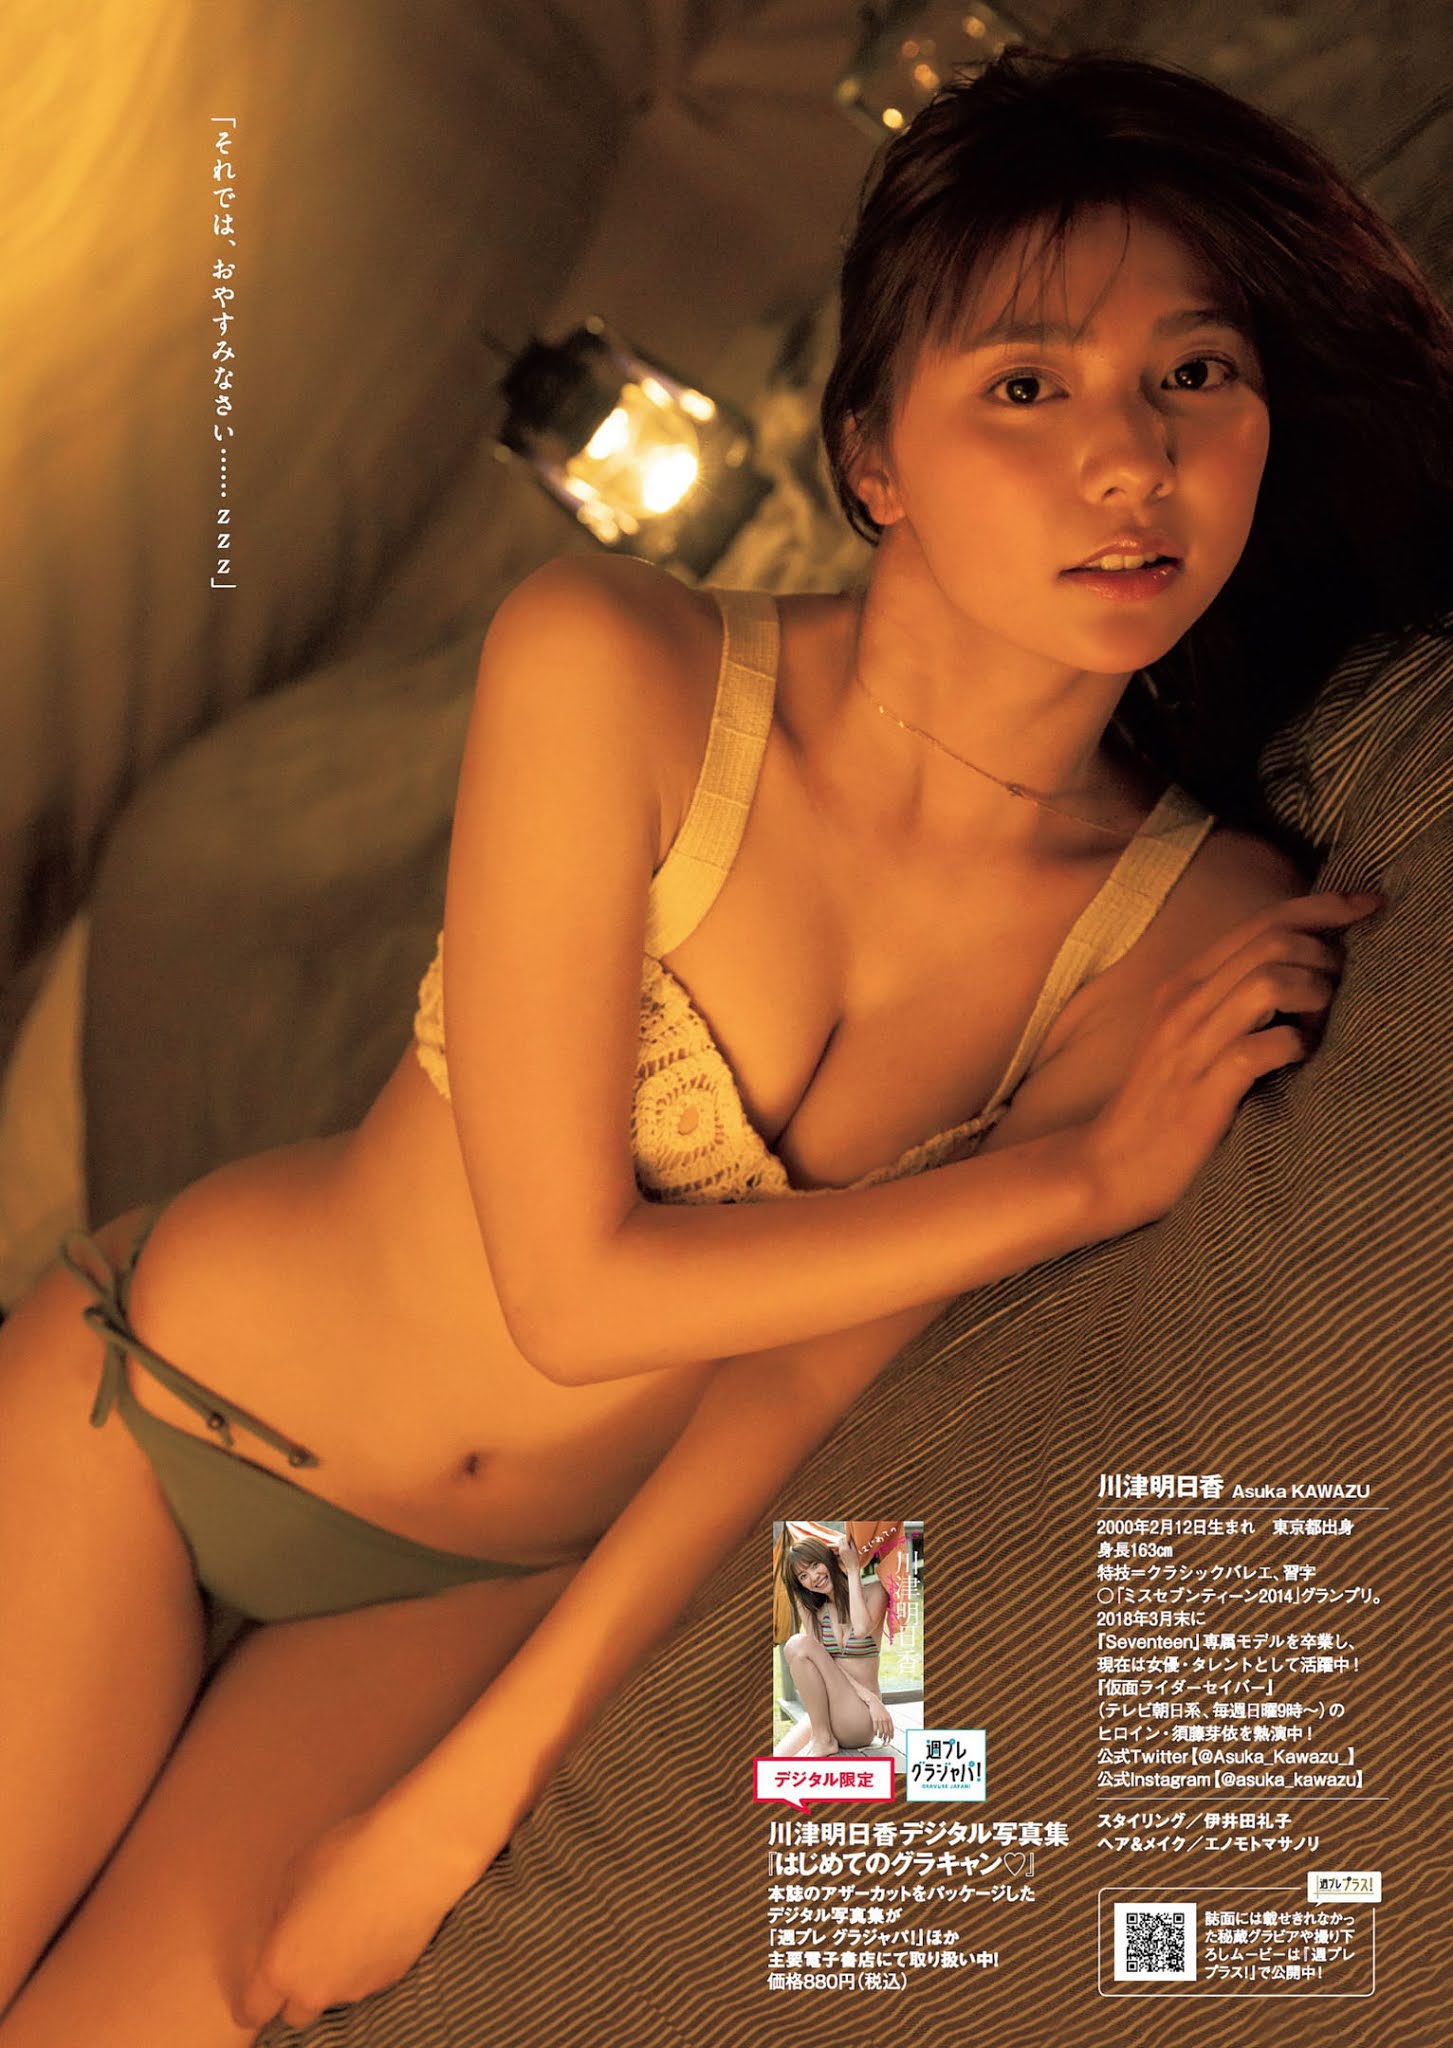 Asuka Kawazu 川津明日香, Weekly Playboy 2021 No.19-20 (週刊プレイボーイ 2021年19-20号)